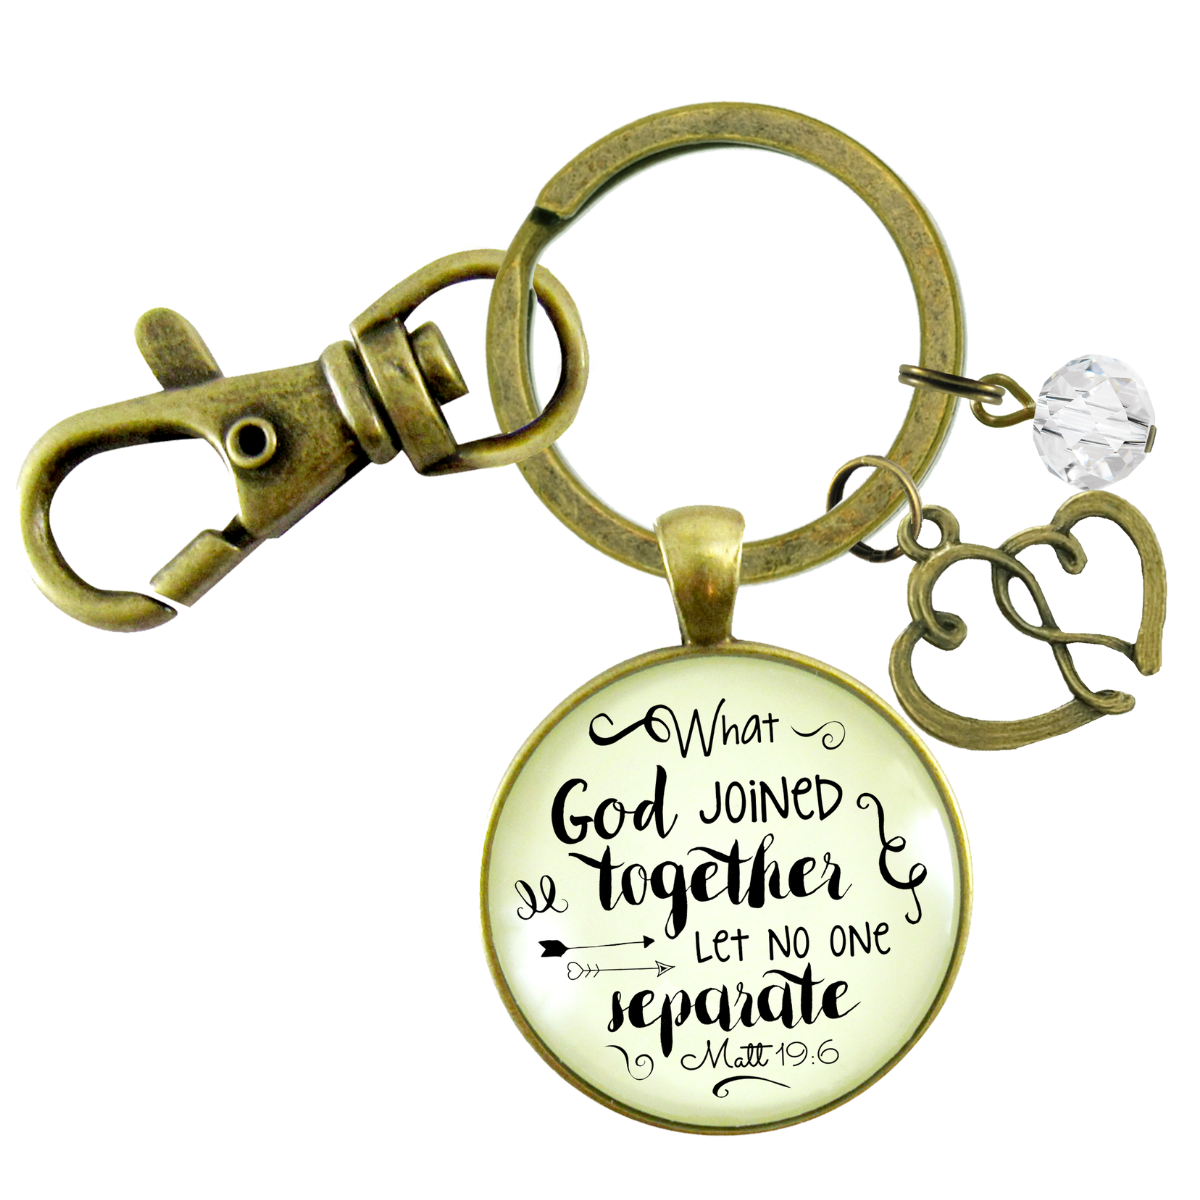 Woman of Faith Keychain Marriage Quote Bridal Shower Wedding Gift  Keychain - Women - Gutsy Goodness Handmade Jewelry